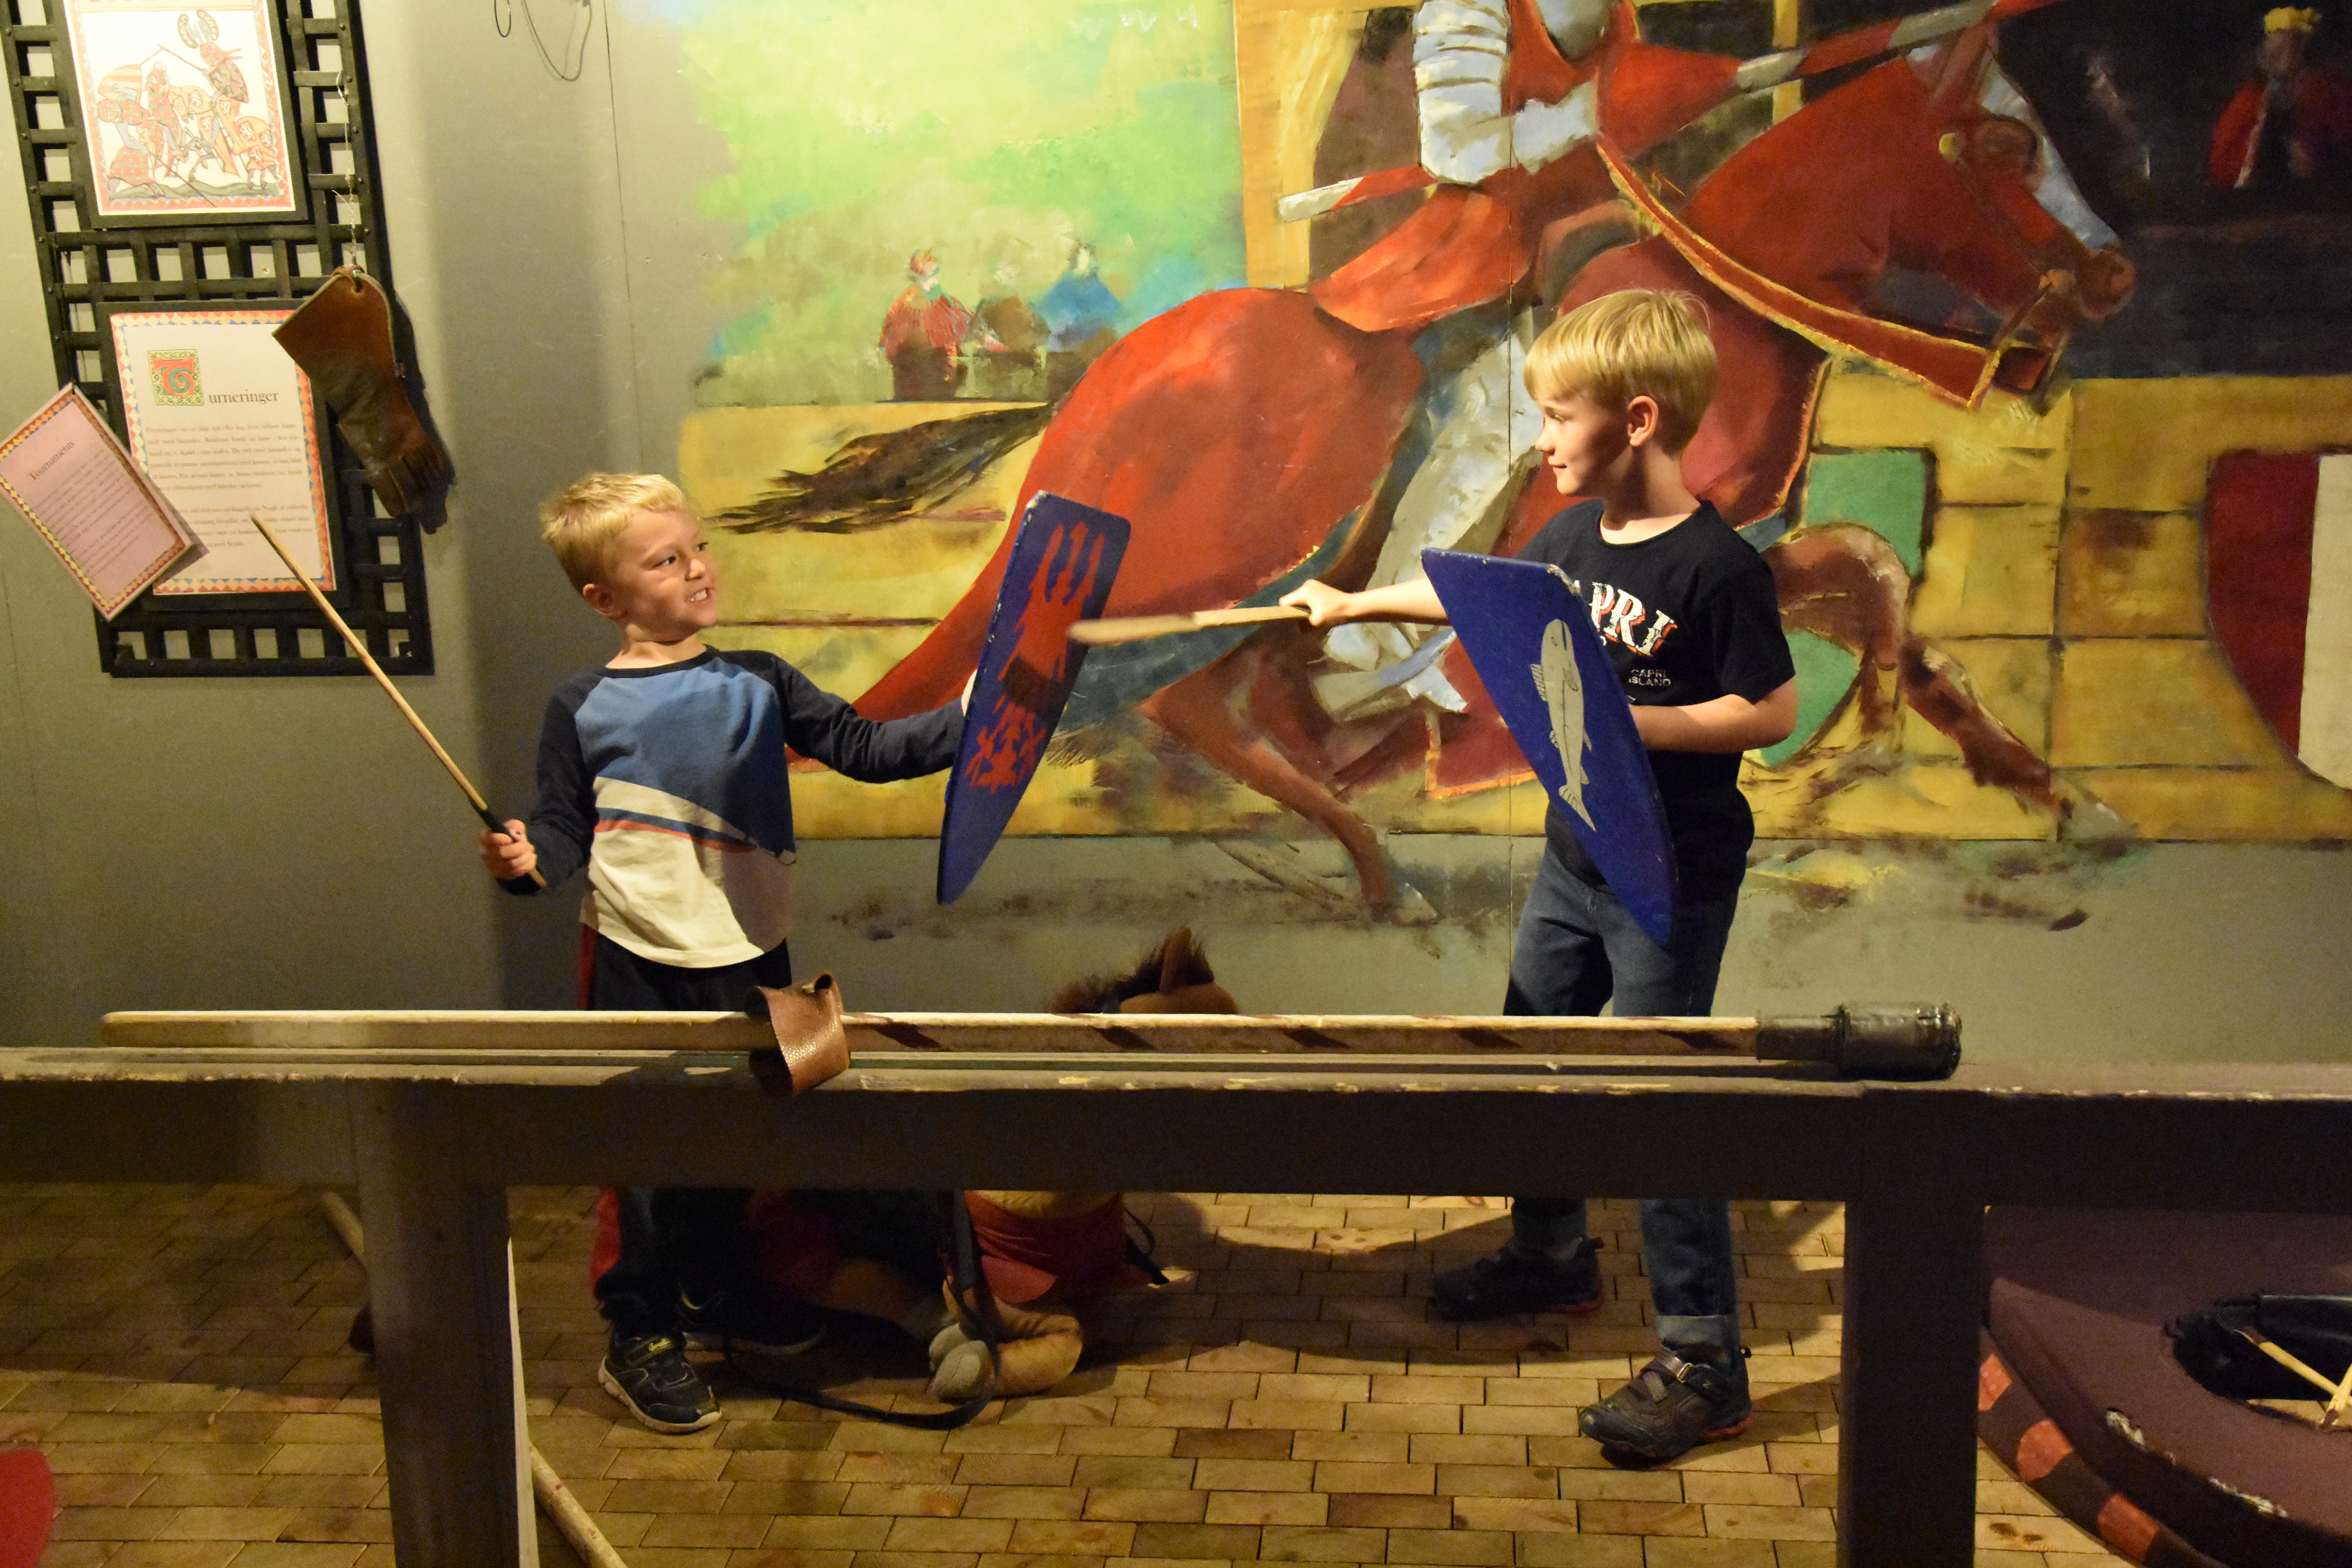 Knight training at the Ribe Viking Museum in Ribe, Denmark